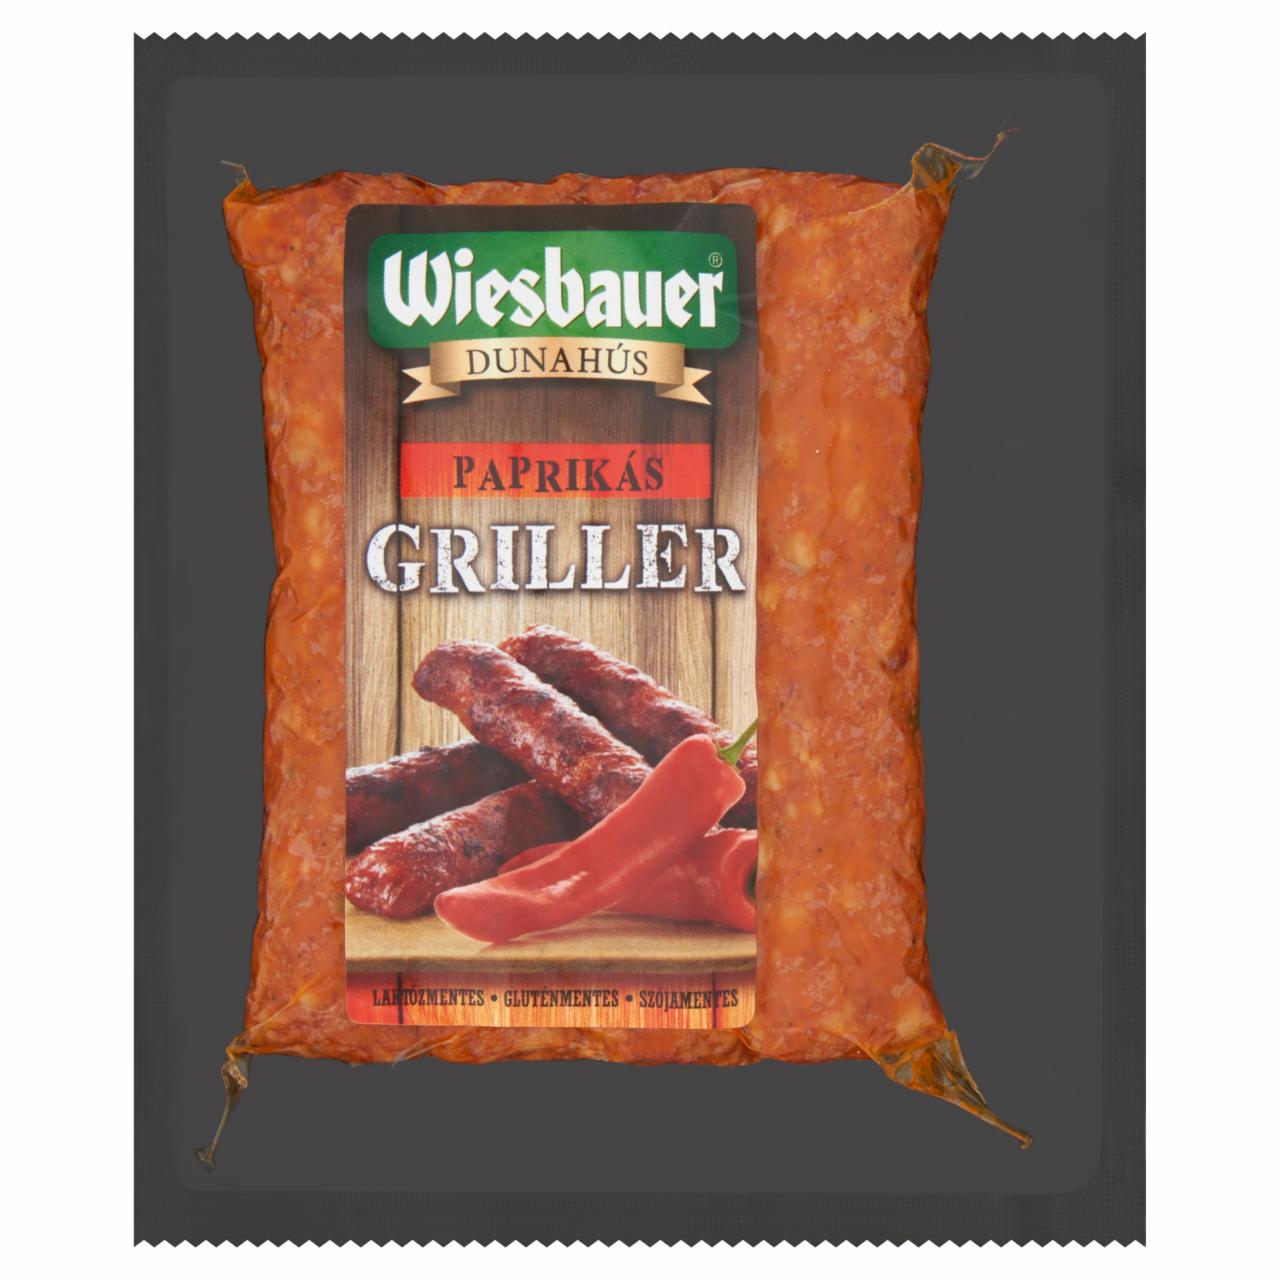 Képek - Wiesbauer paprikás griller 200 g